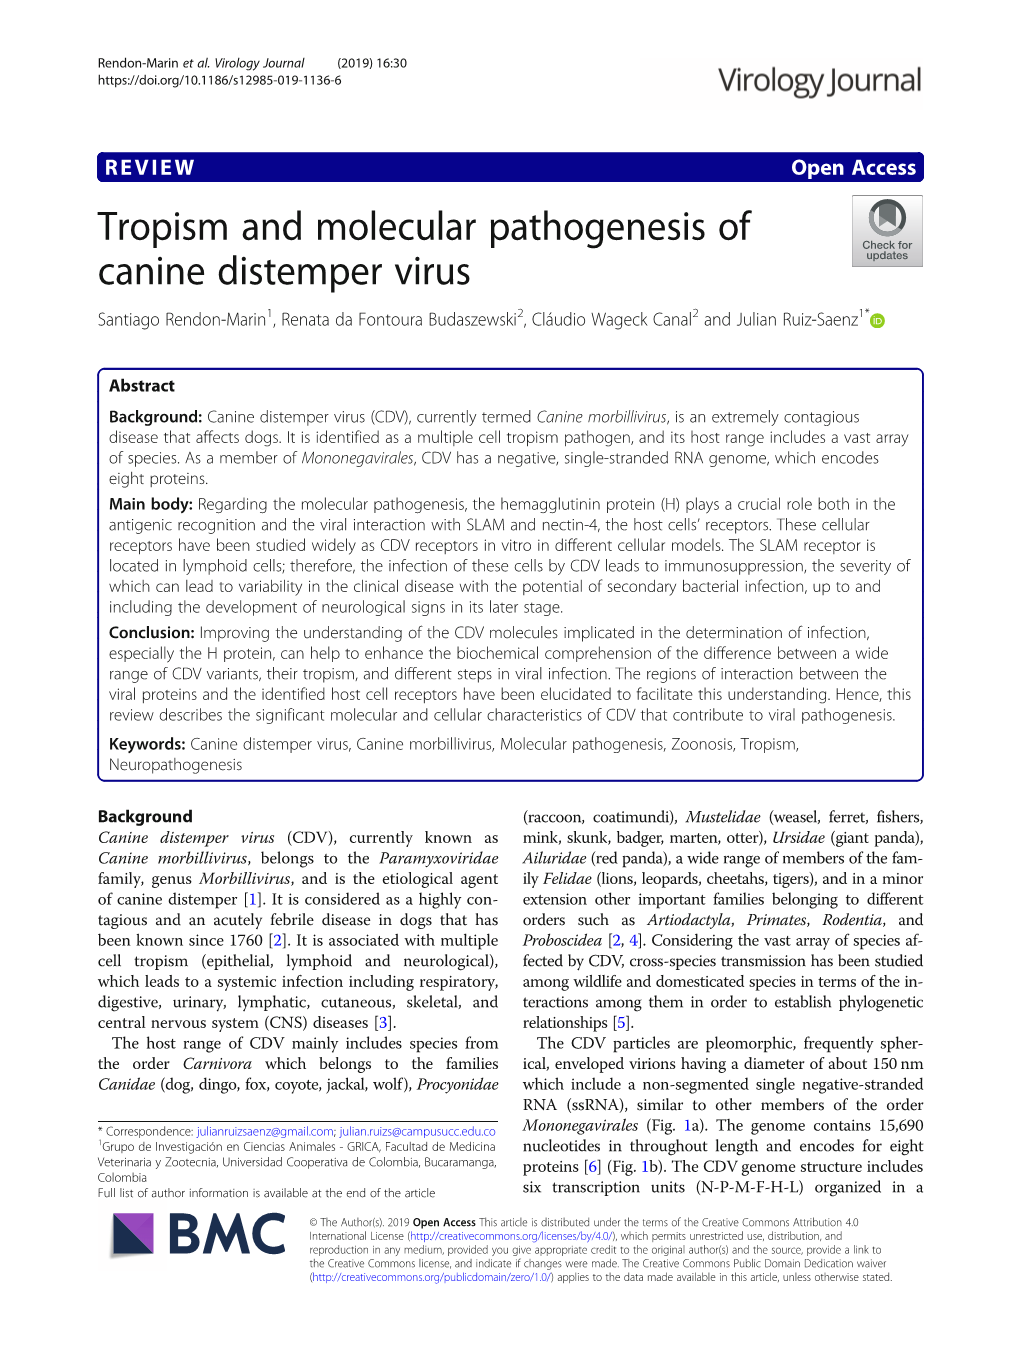 Tropism and Molecular Pathogenesis of Canine Distemper Virus Santiago Rendon-Marin1, Renata Da Fontoura Budaszewski2, Cláudio Wageck Canal2 and Julian Ruiz-Saenz1*